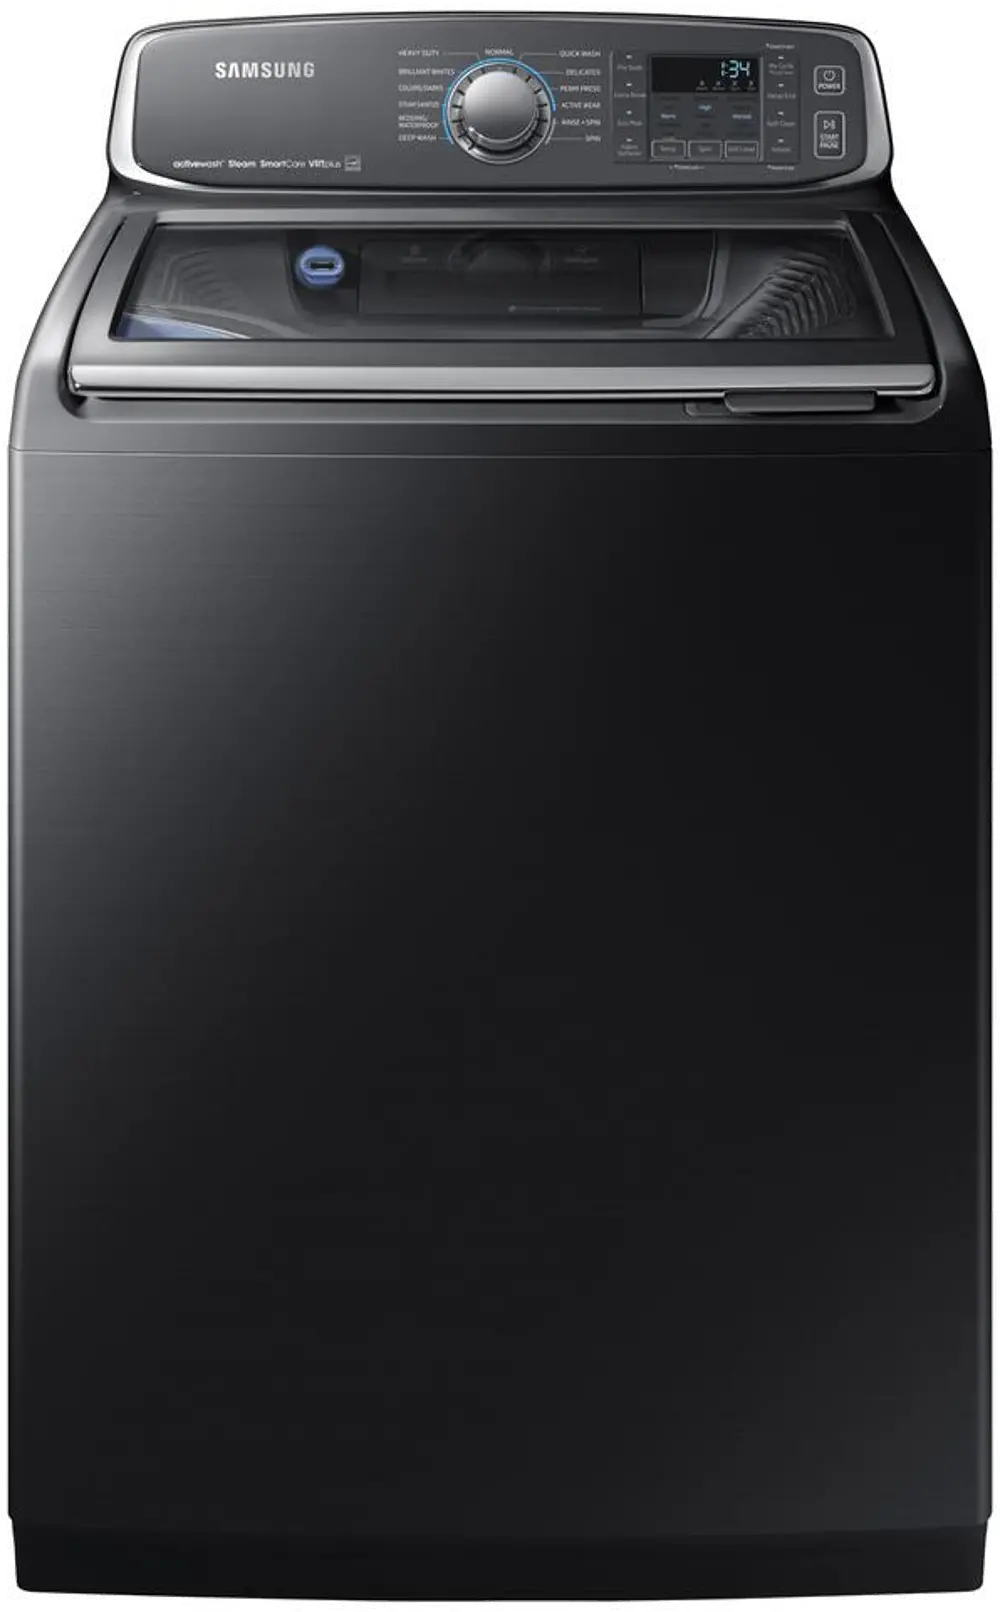 WA52M7750AV Samsung Top Load Washer - 5.2 cu. ft. Black Stainless Steel-1